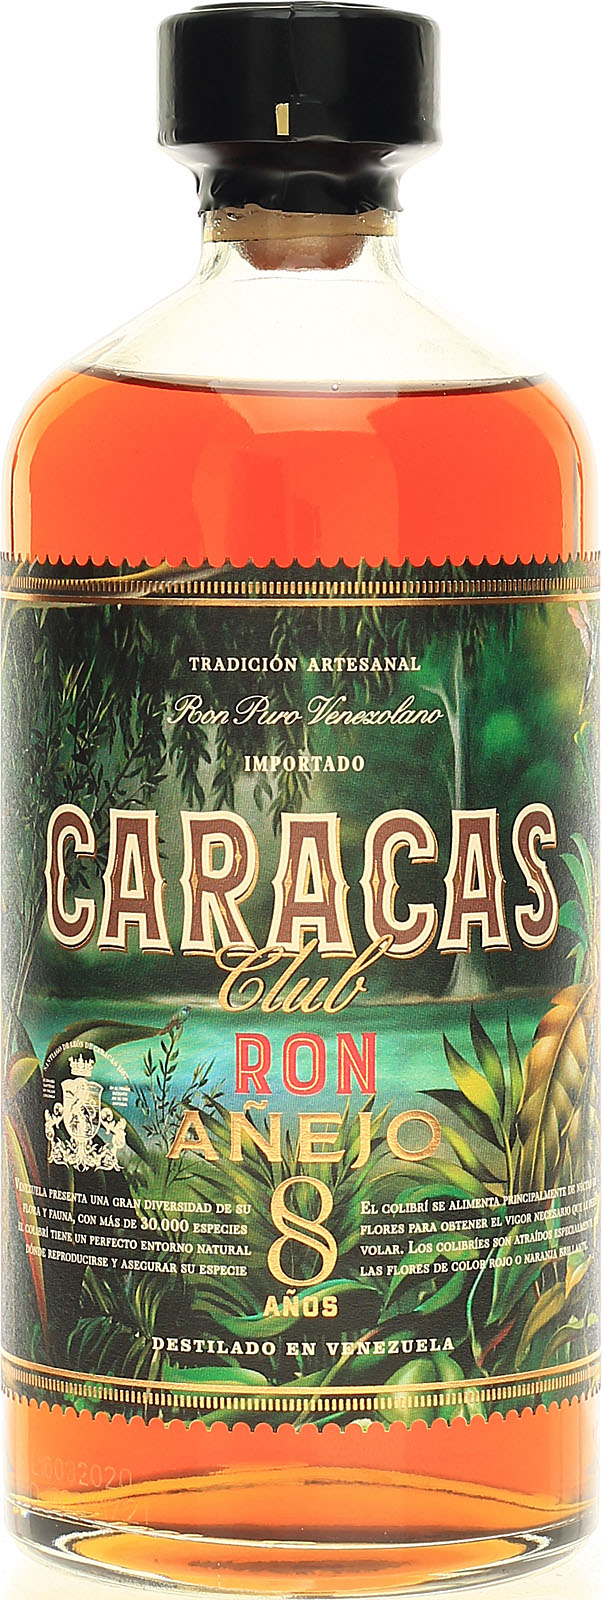 Caracas Club Ron Anejo 8 Liter 40% 0,7 Jahre